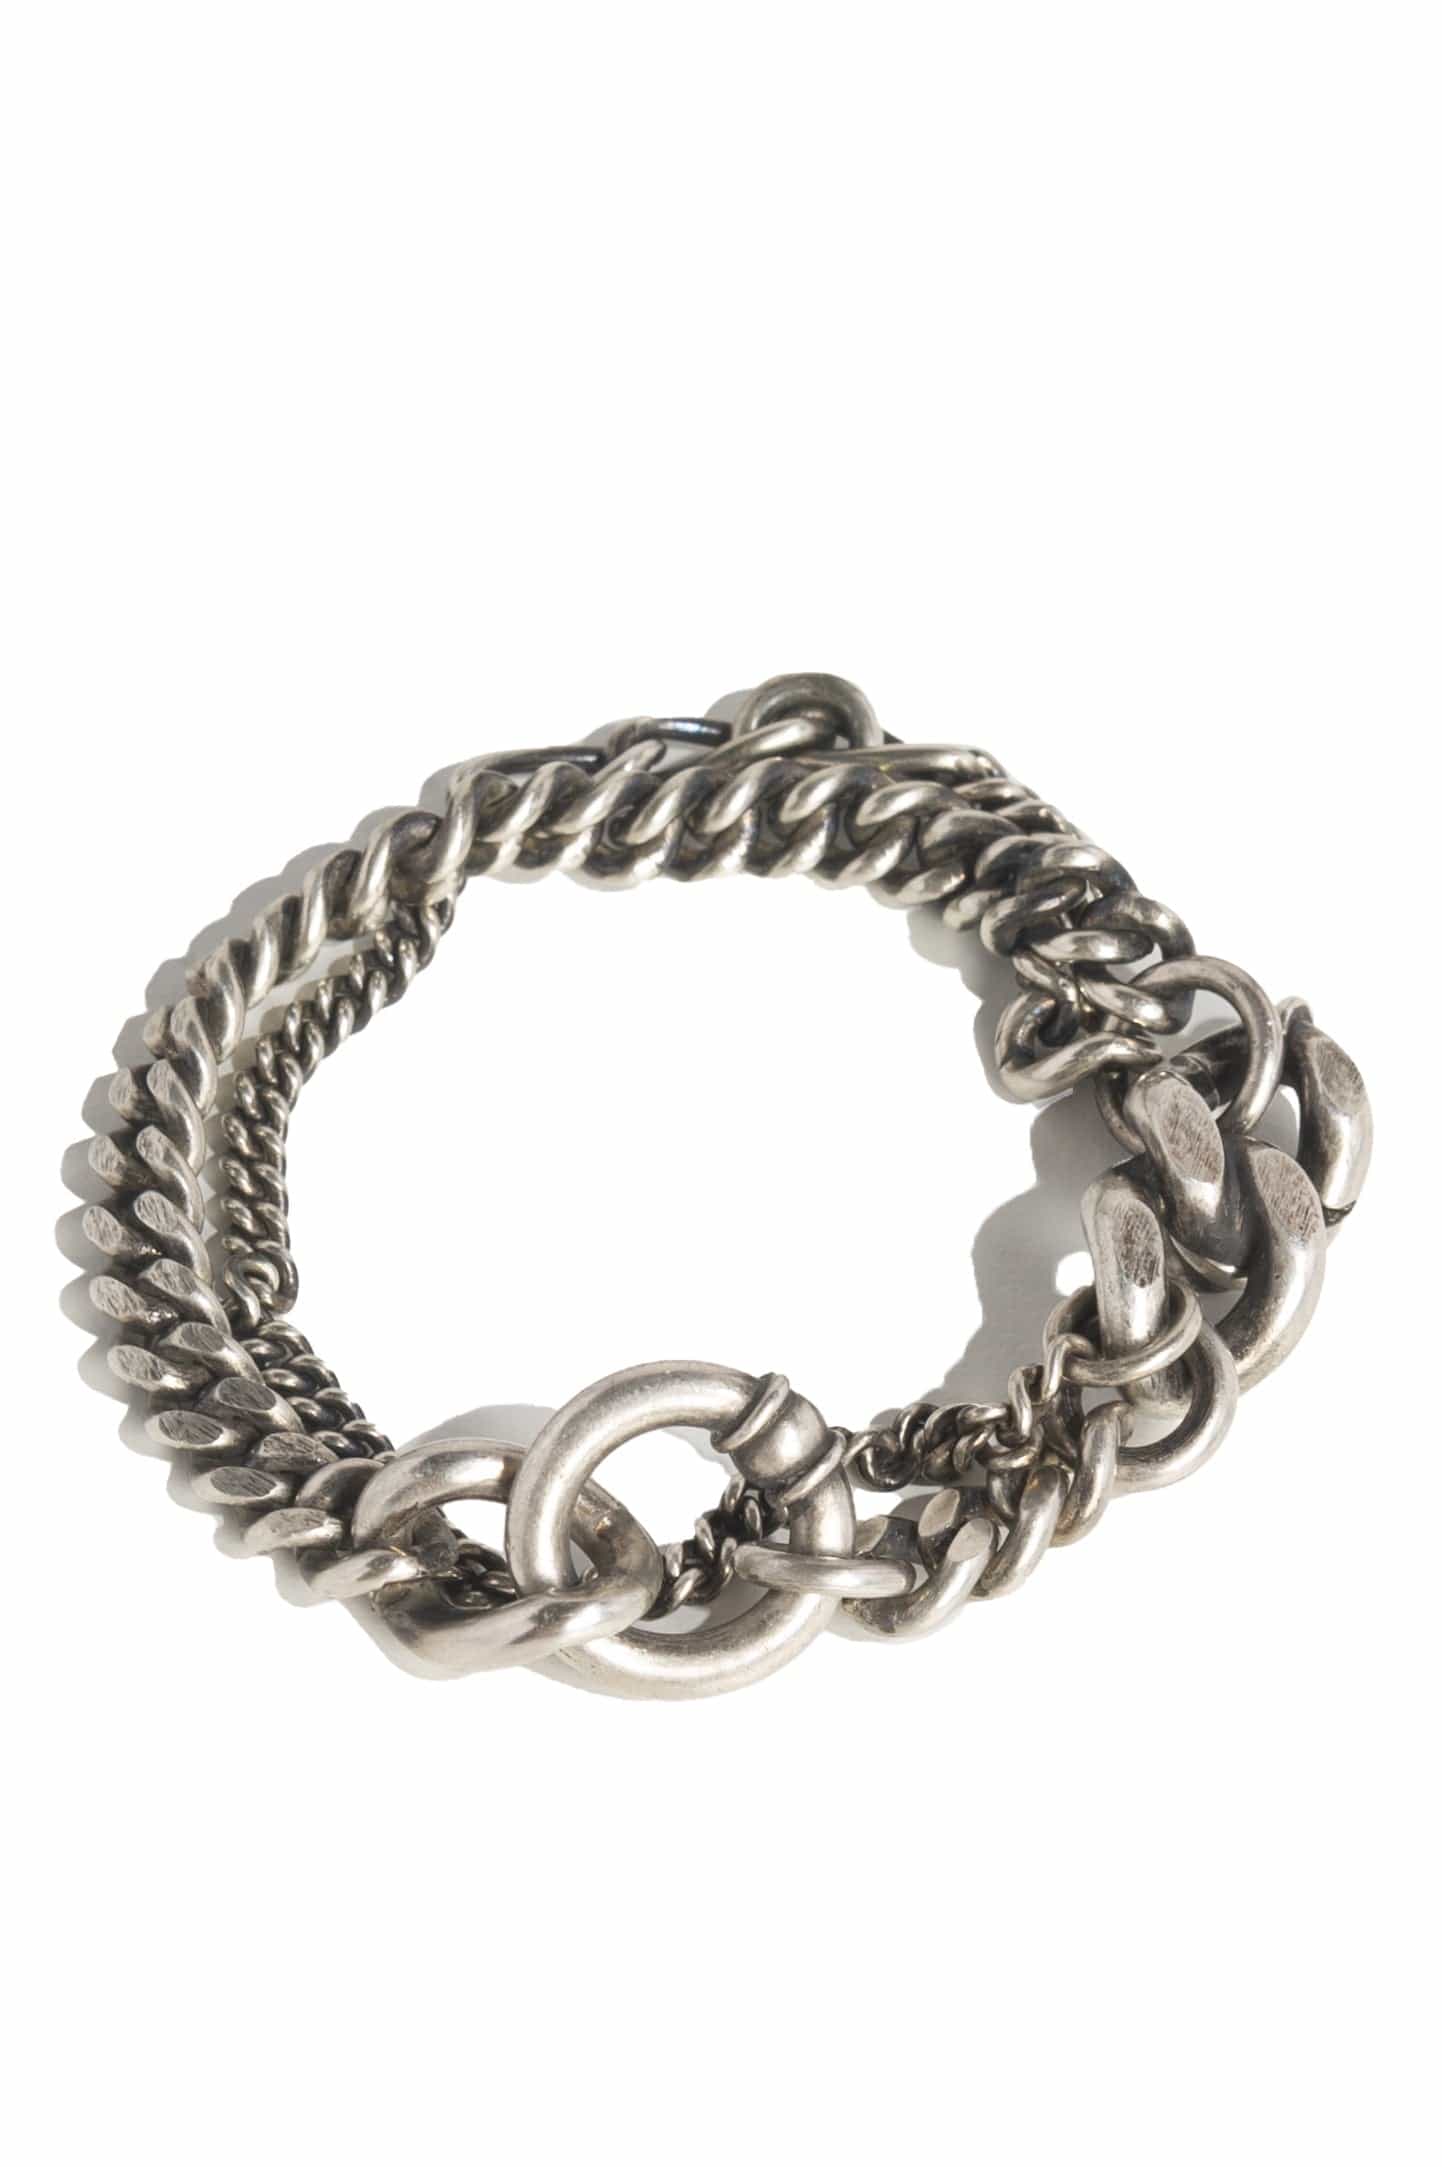 Werkstatt München Silver Chains Two – Antidote and Bracelet Fashion Lifestyle Ring